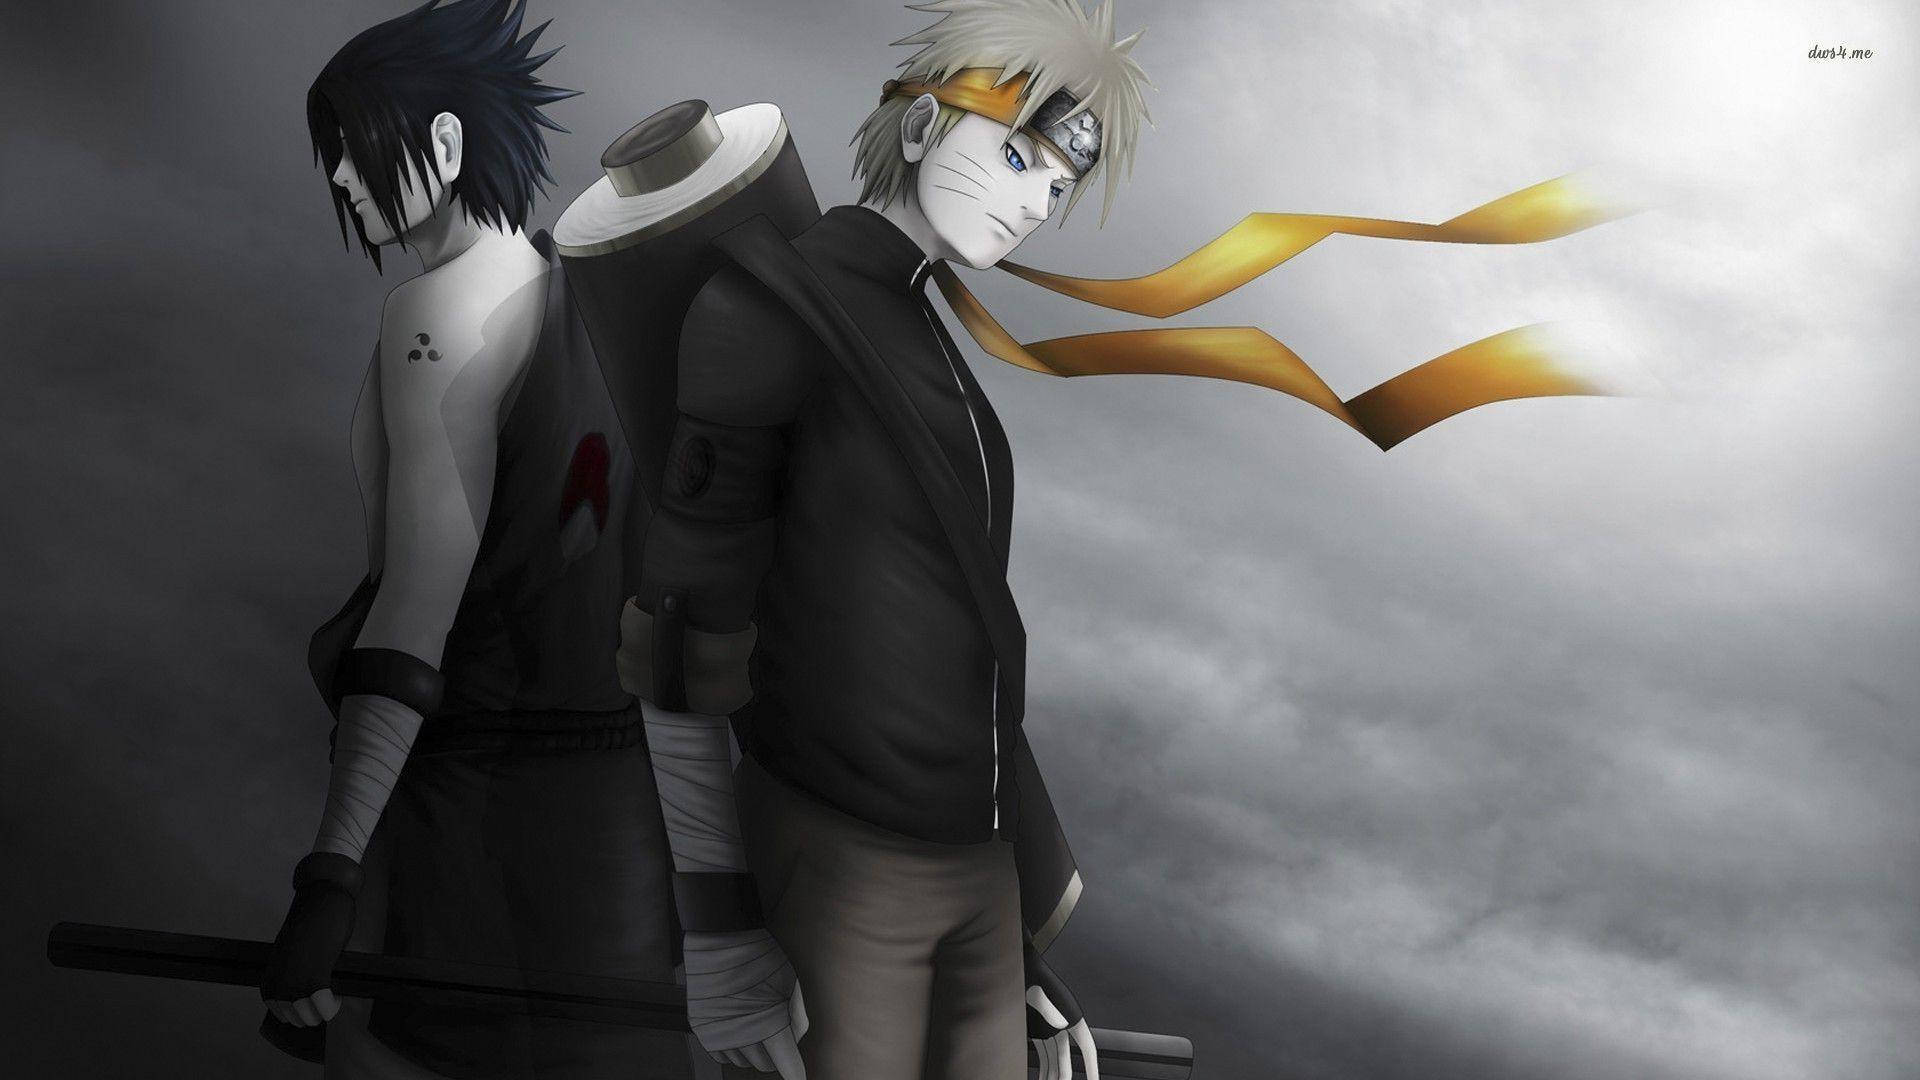 Aesthetic Sasuke And Naruto Pose